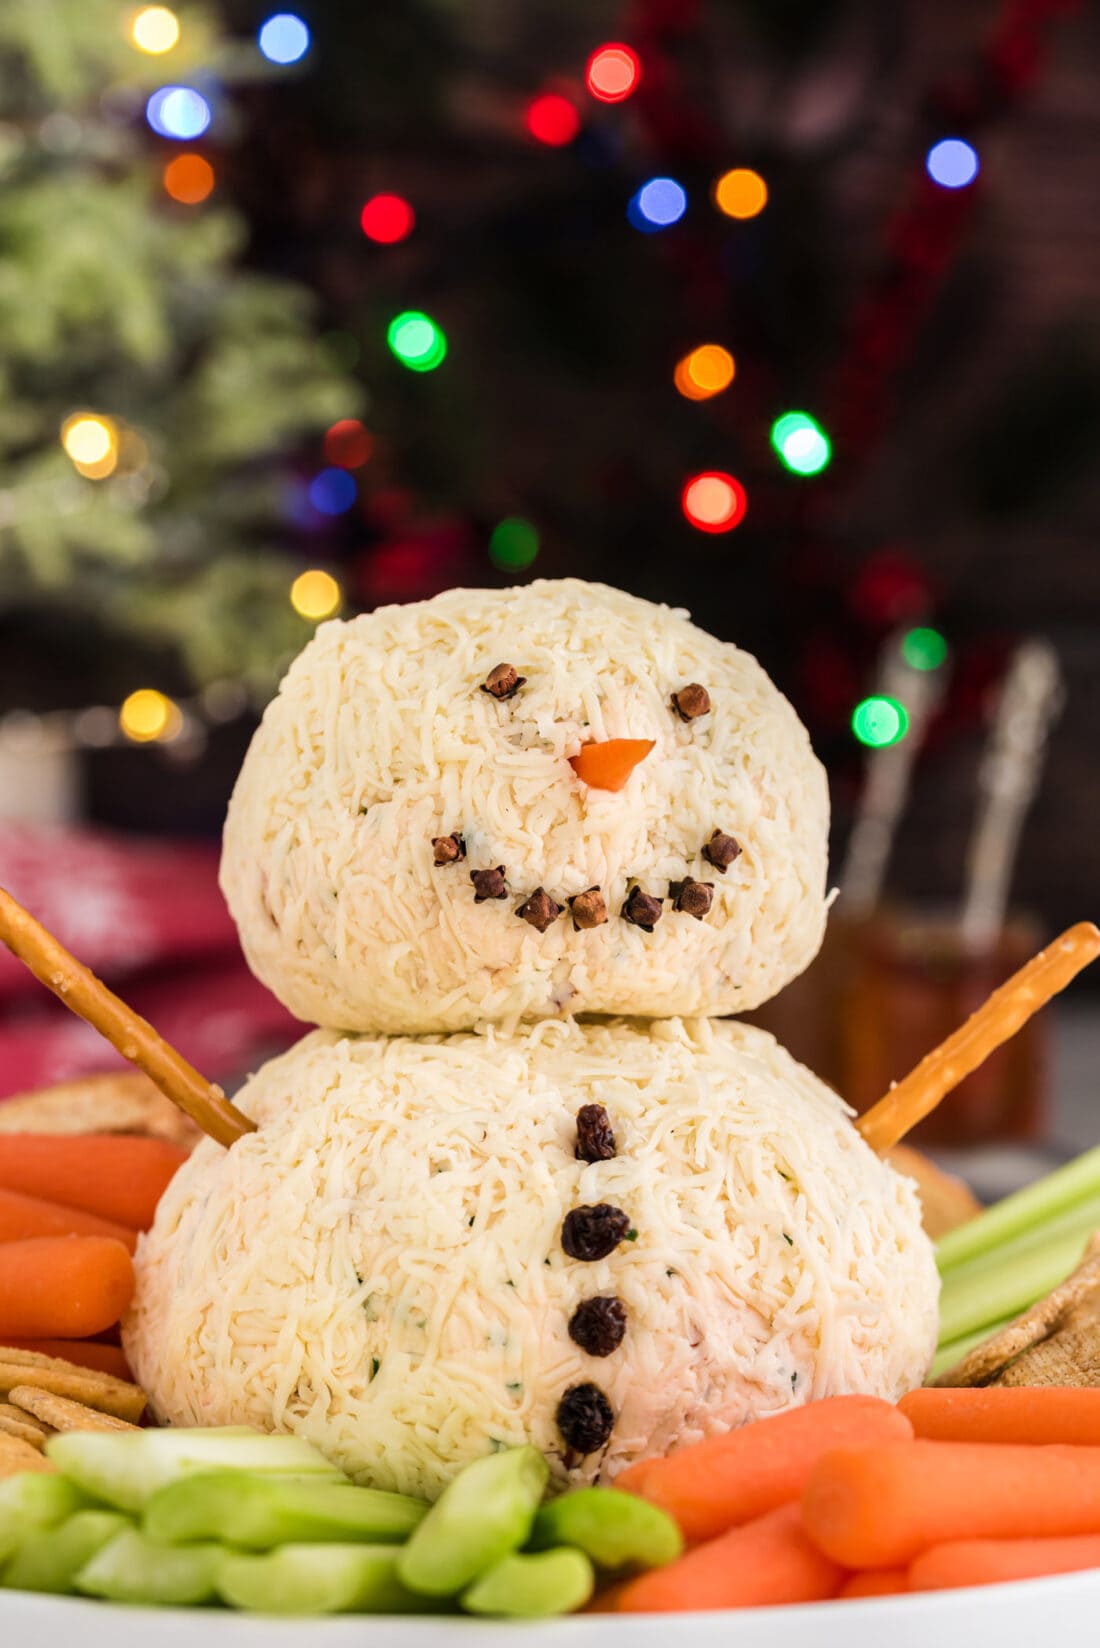 Snowman Cheeseball in Christmas setting